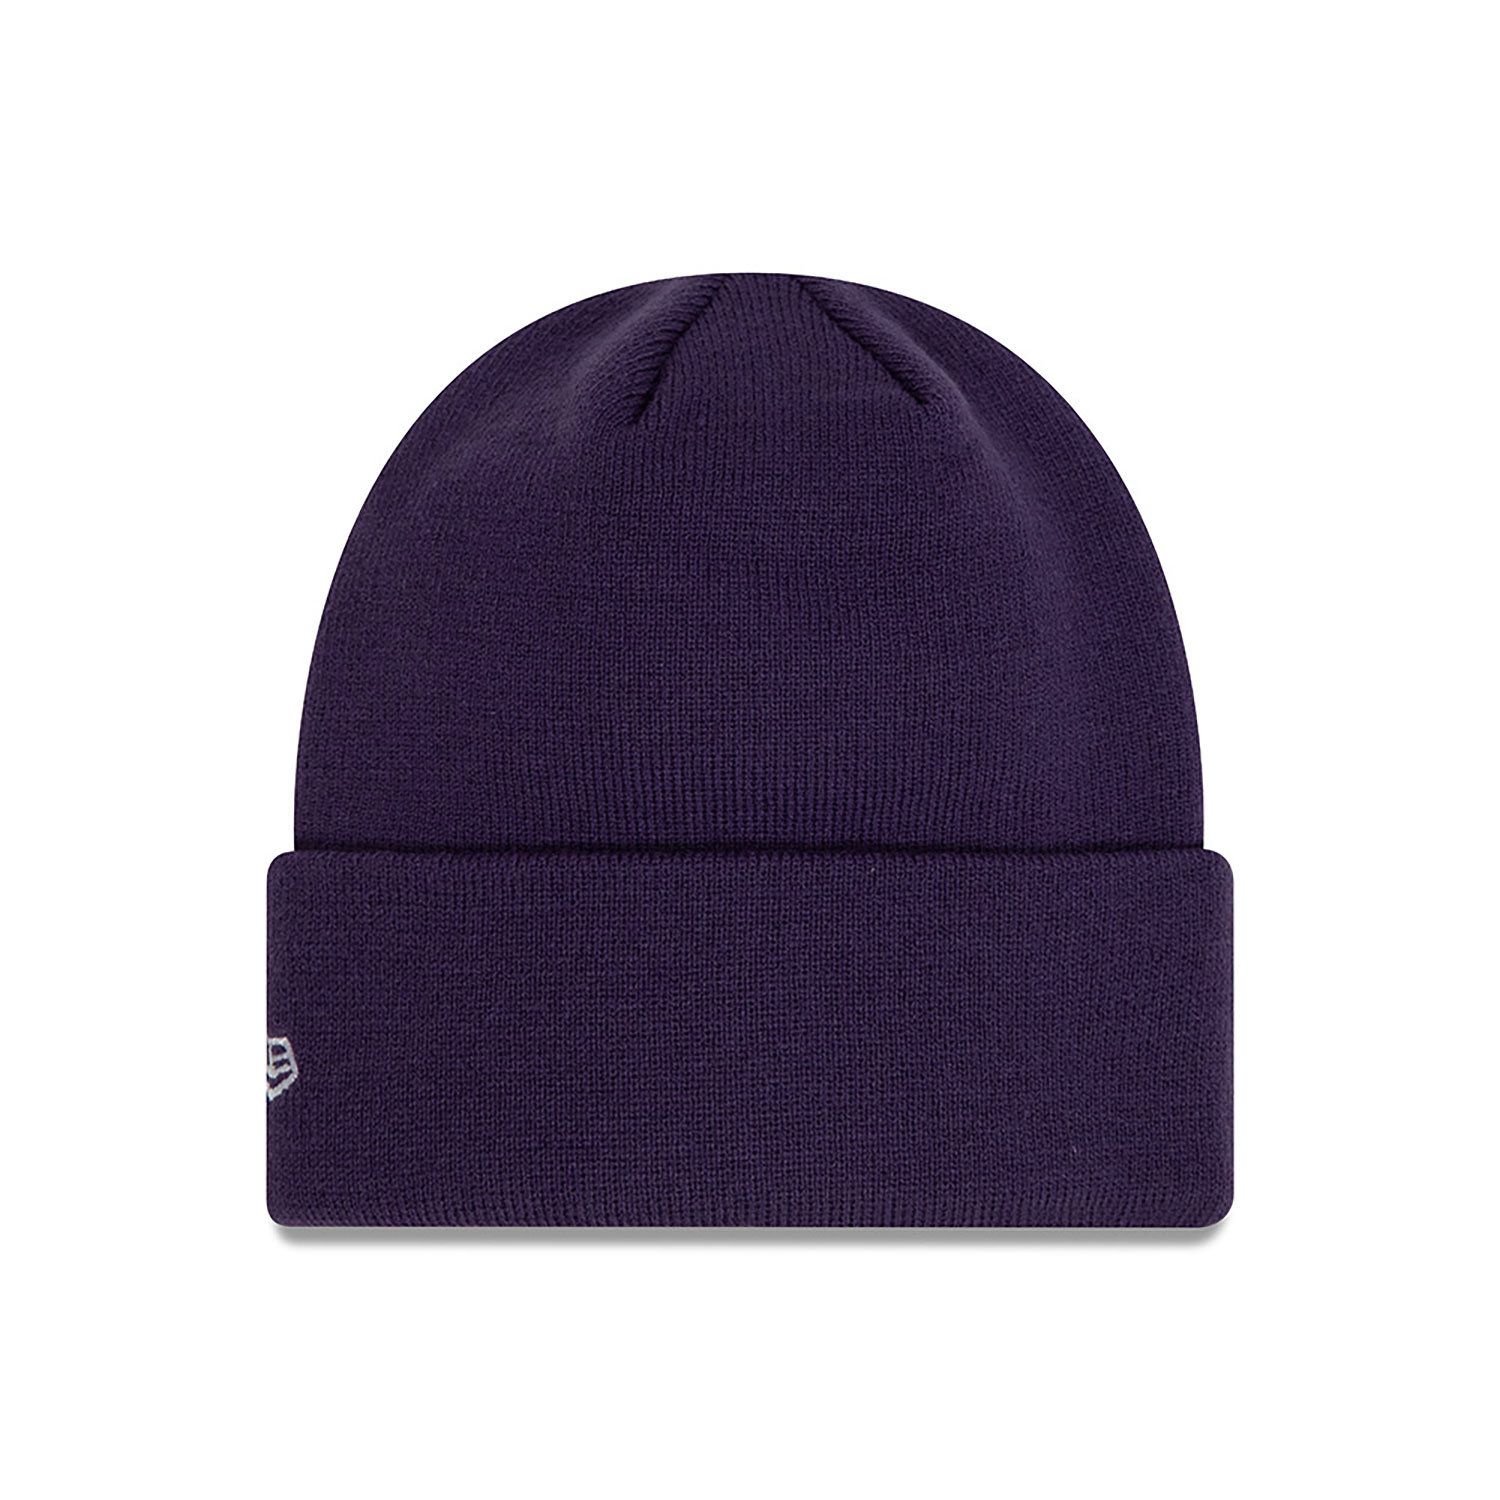 AC Milan Seasonal Purple Cuff Knit Beanie Hat